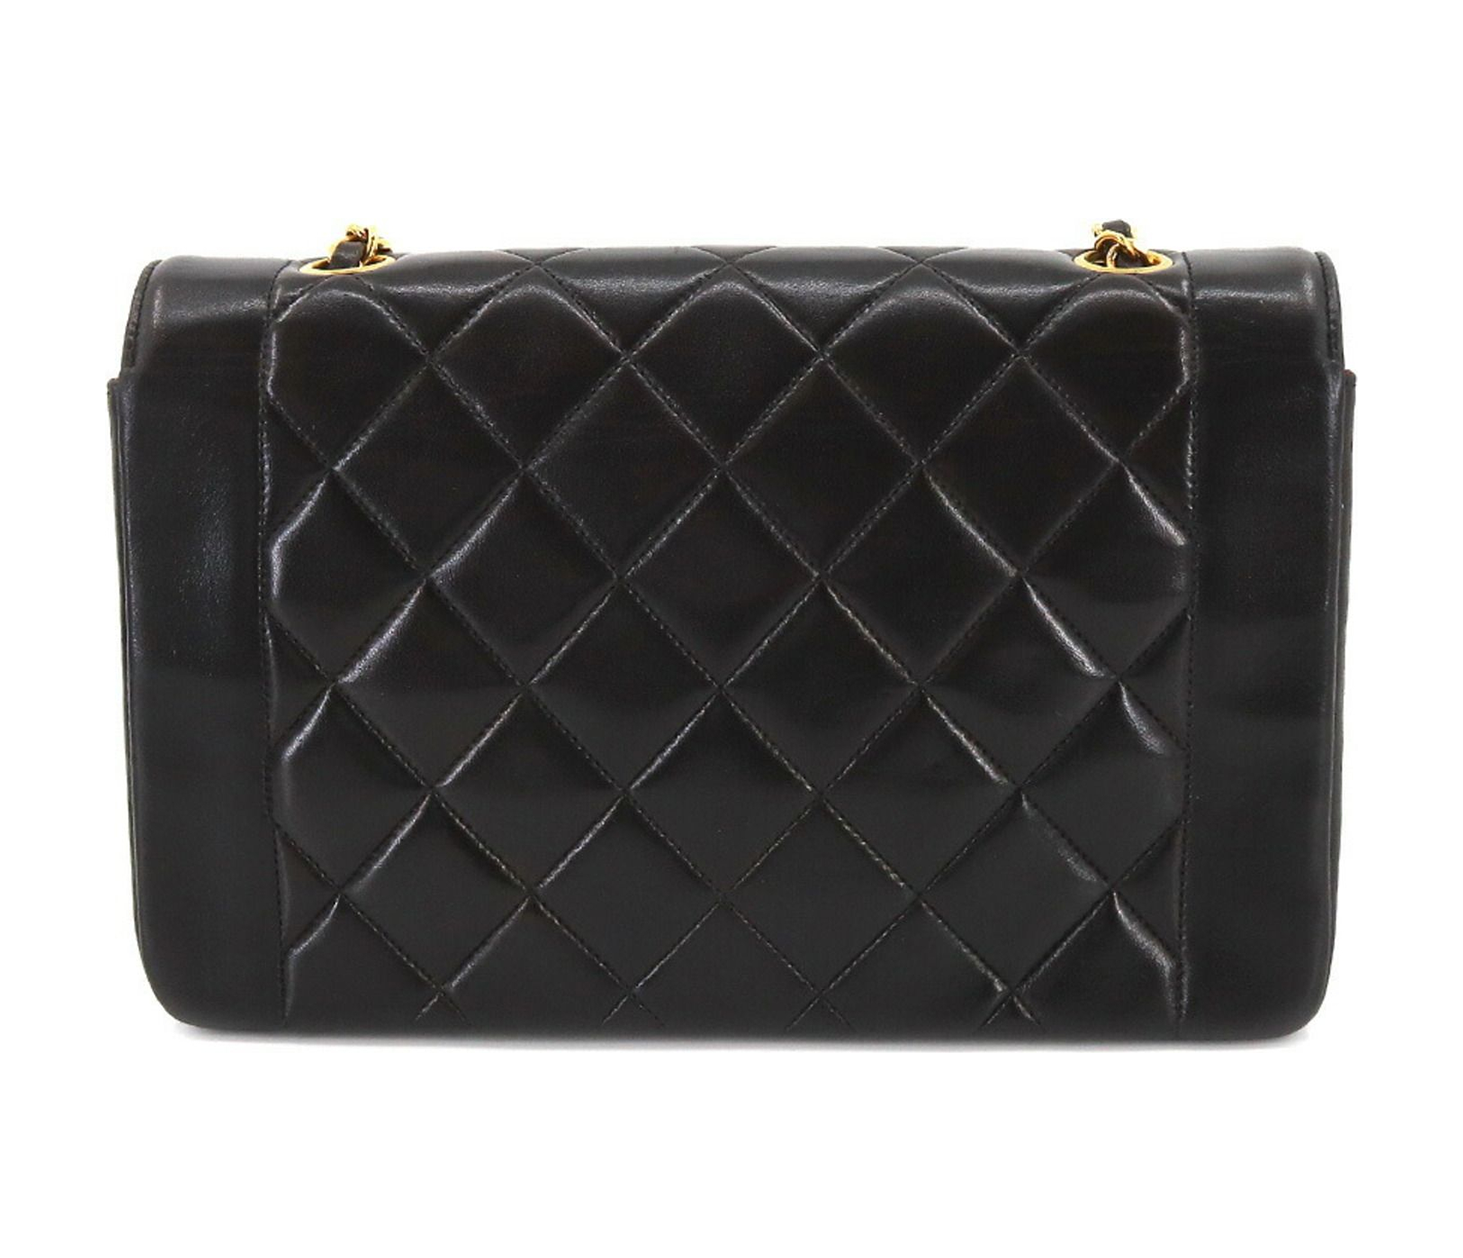 CHANEL Chanel Diana 25 Lambskin Shoulder/Crossbody Bag in Black - Vault 55